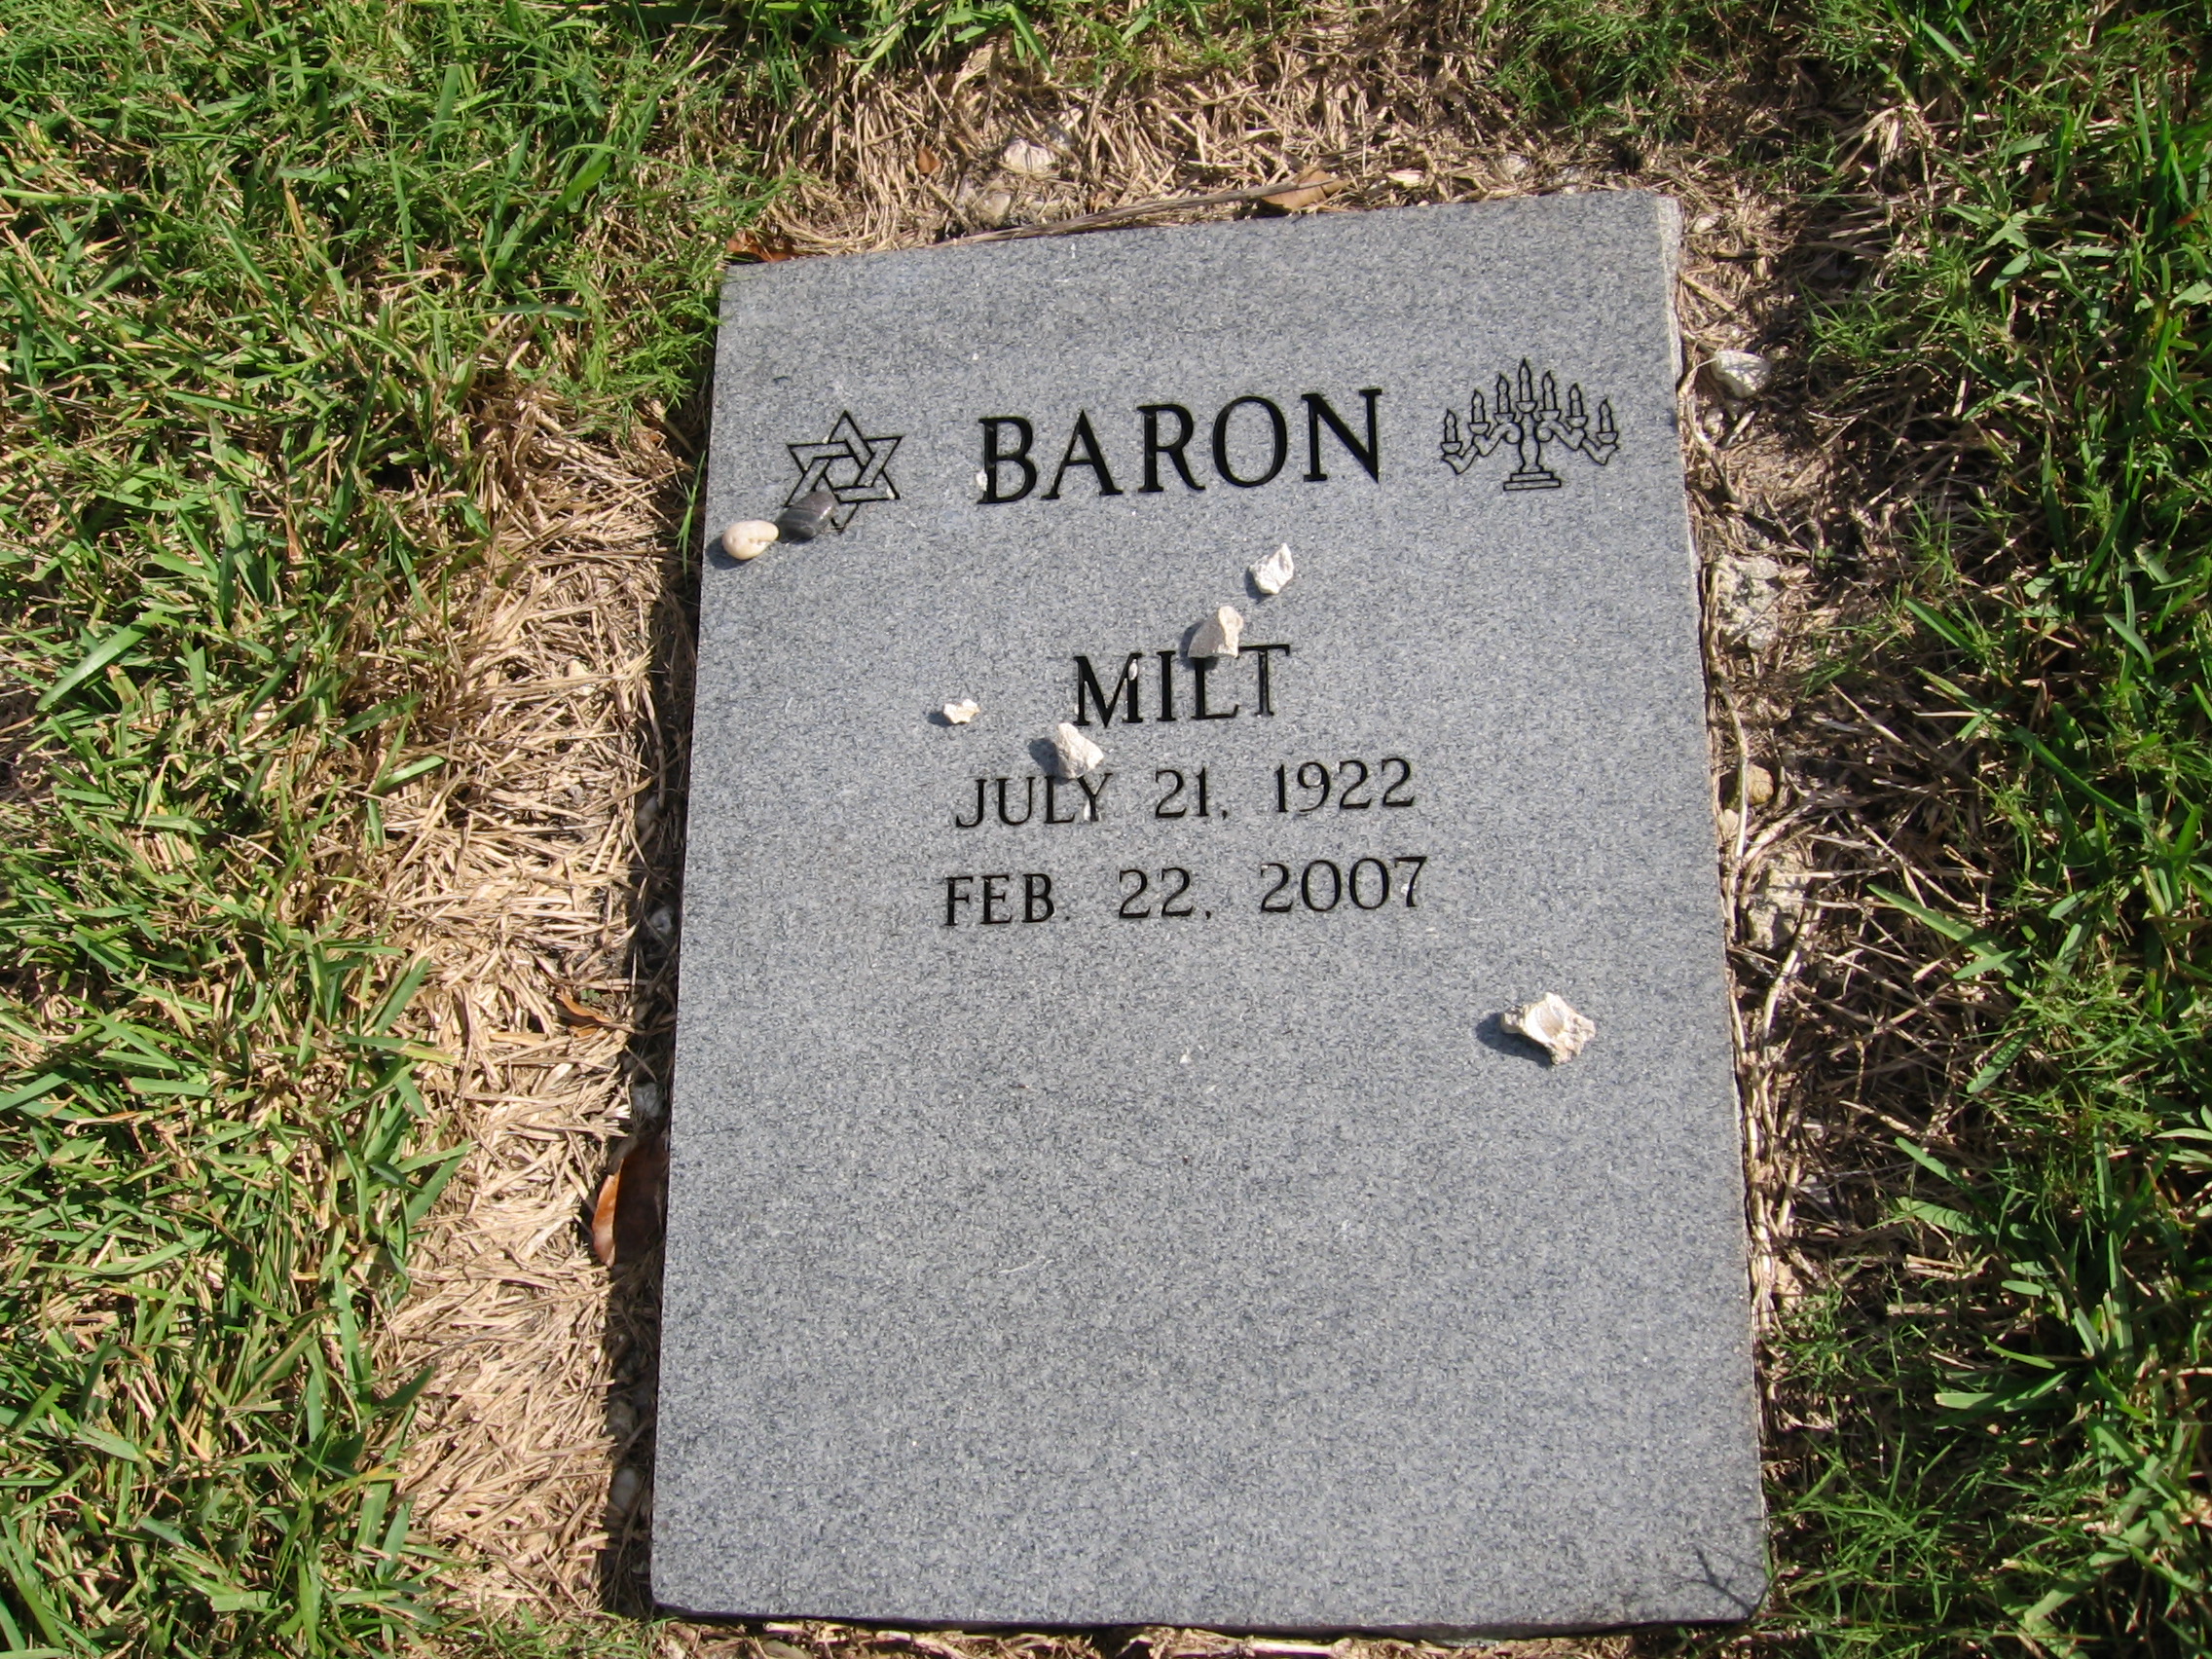 Milt Baron